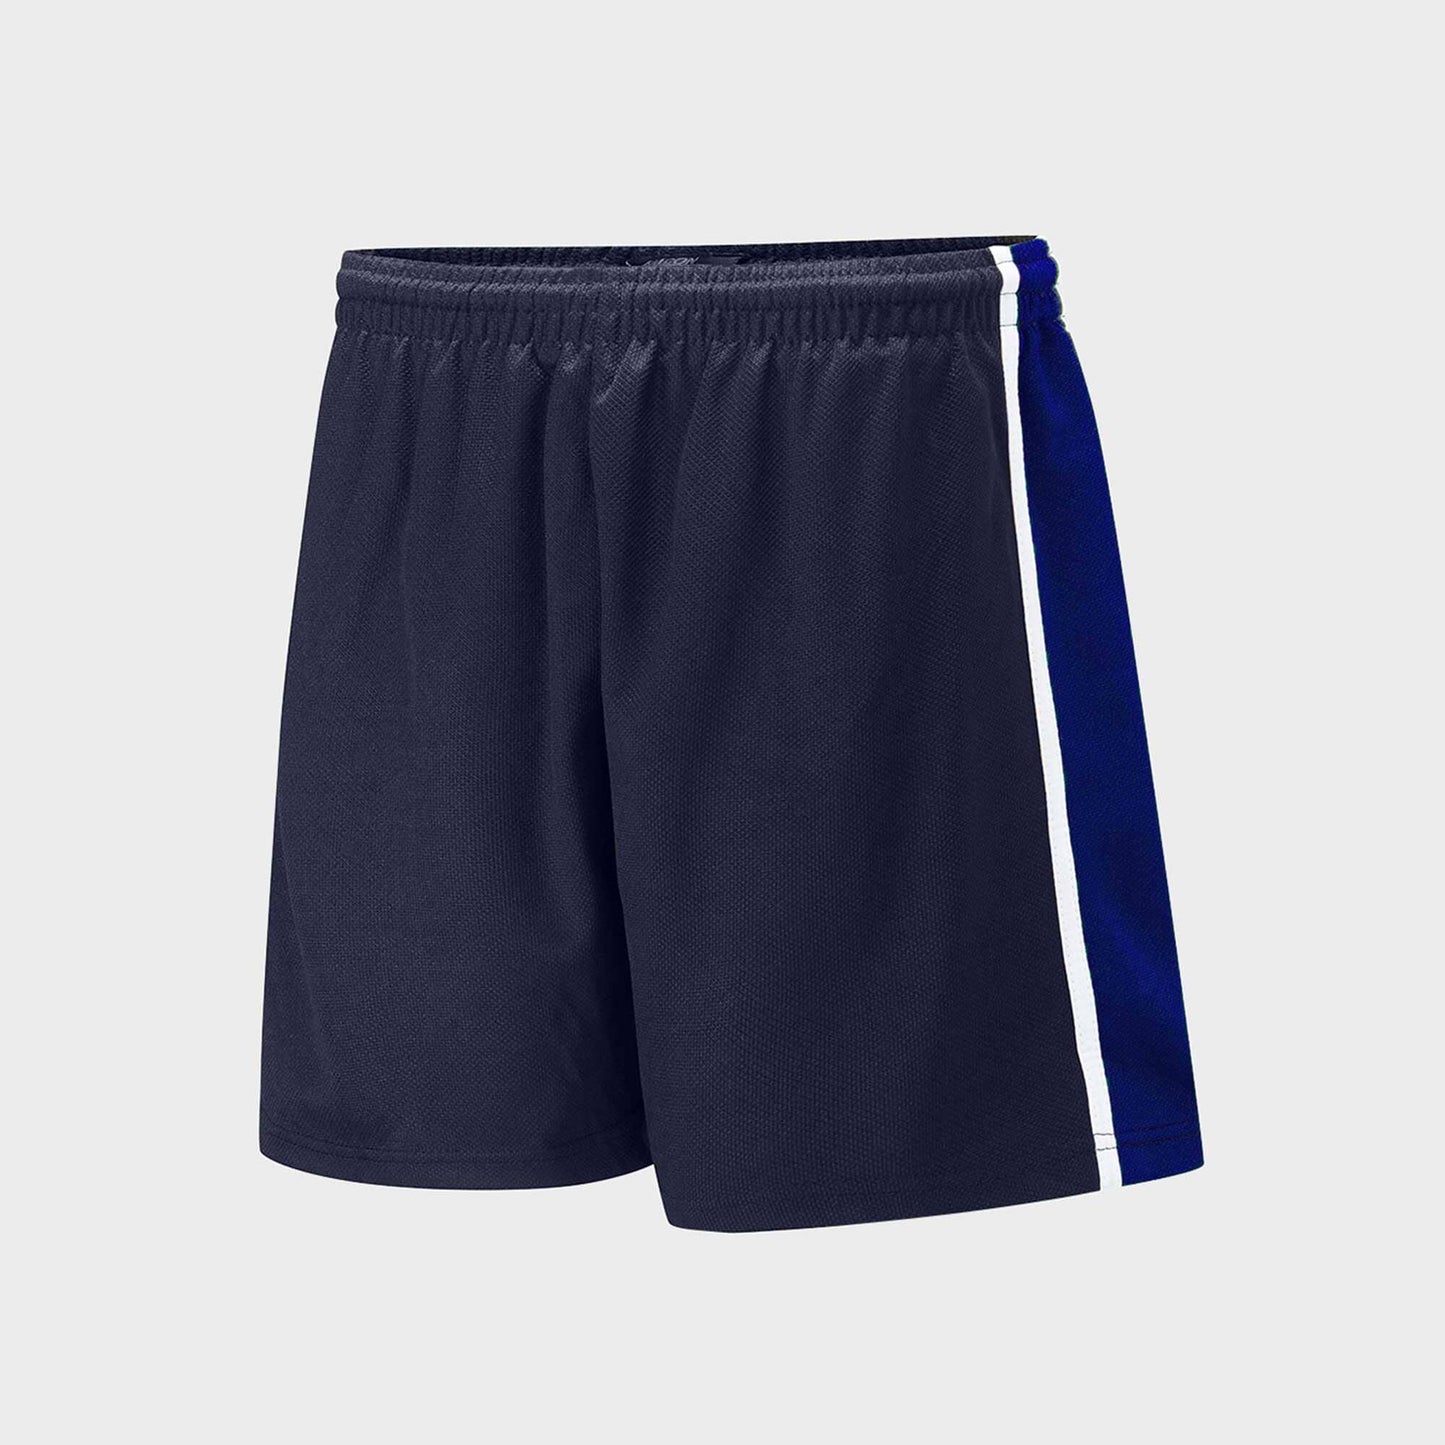 Falcon Men's Activewear Side Panel Shorts Men's Shorts HAS Apparel Navy & Blue XS 